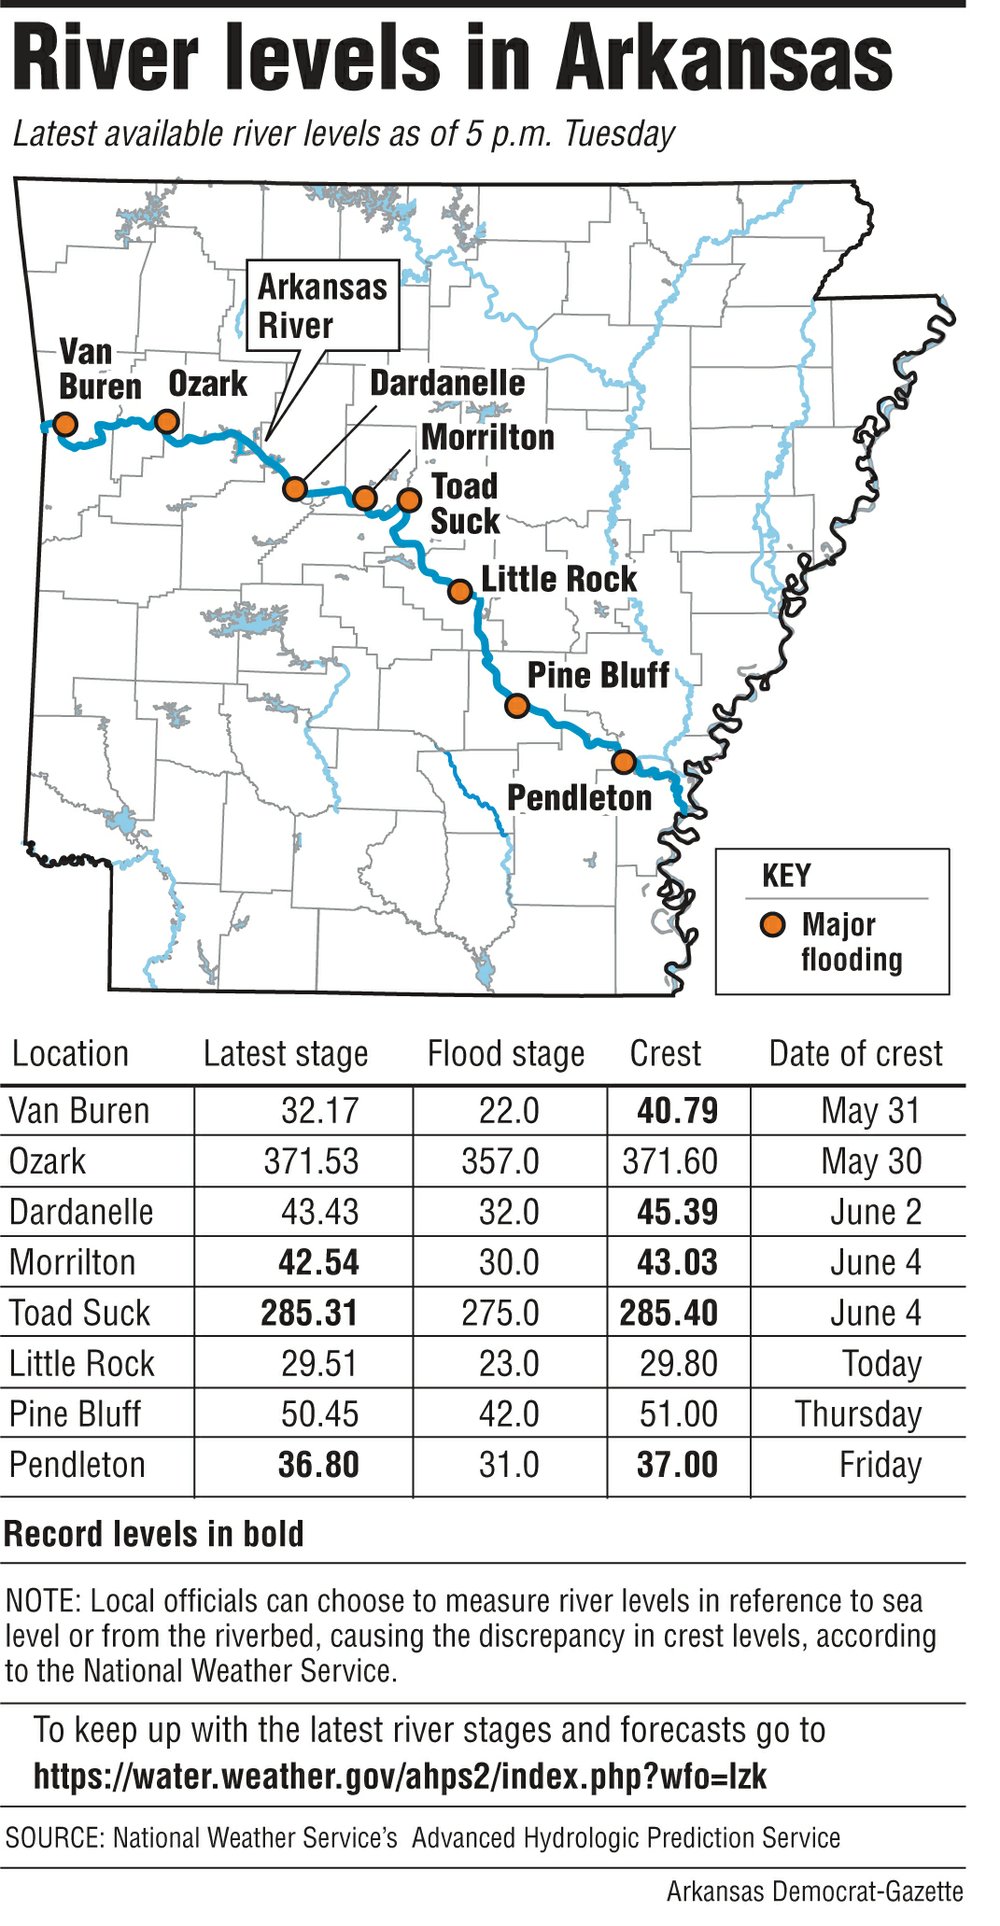 River levels in Arkansas